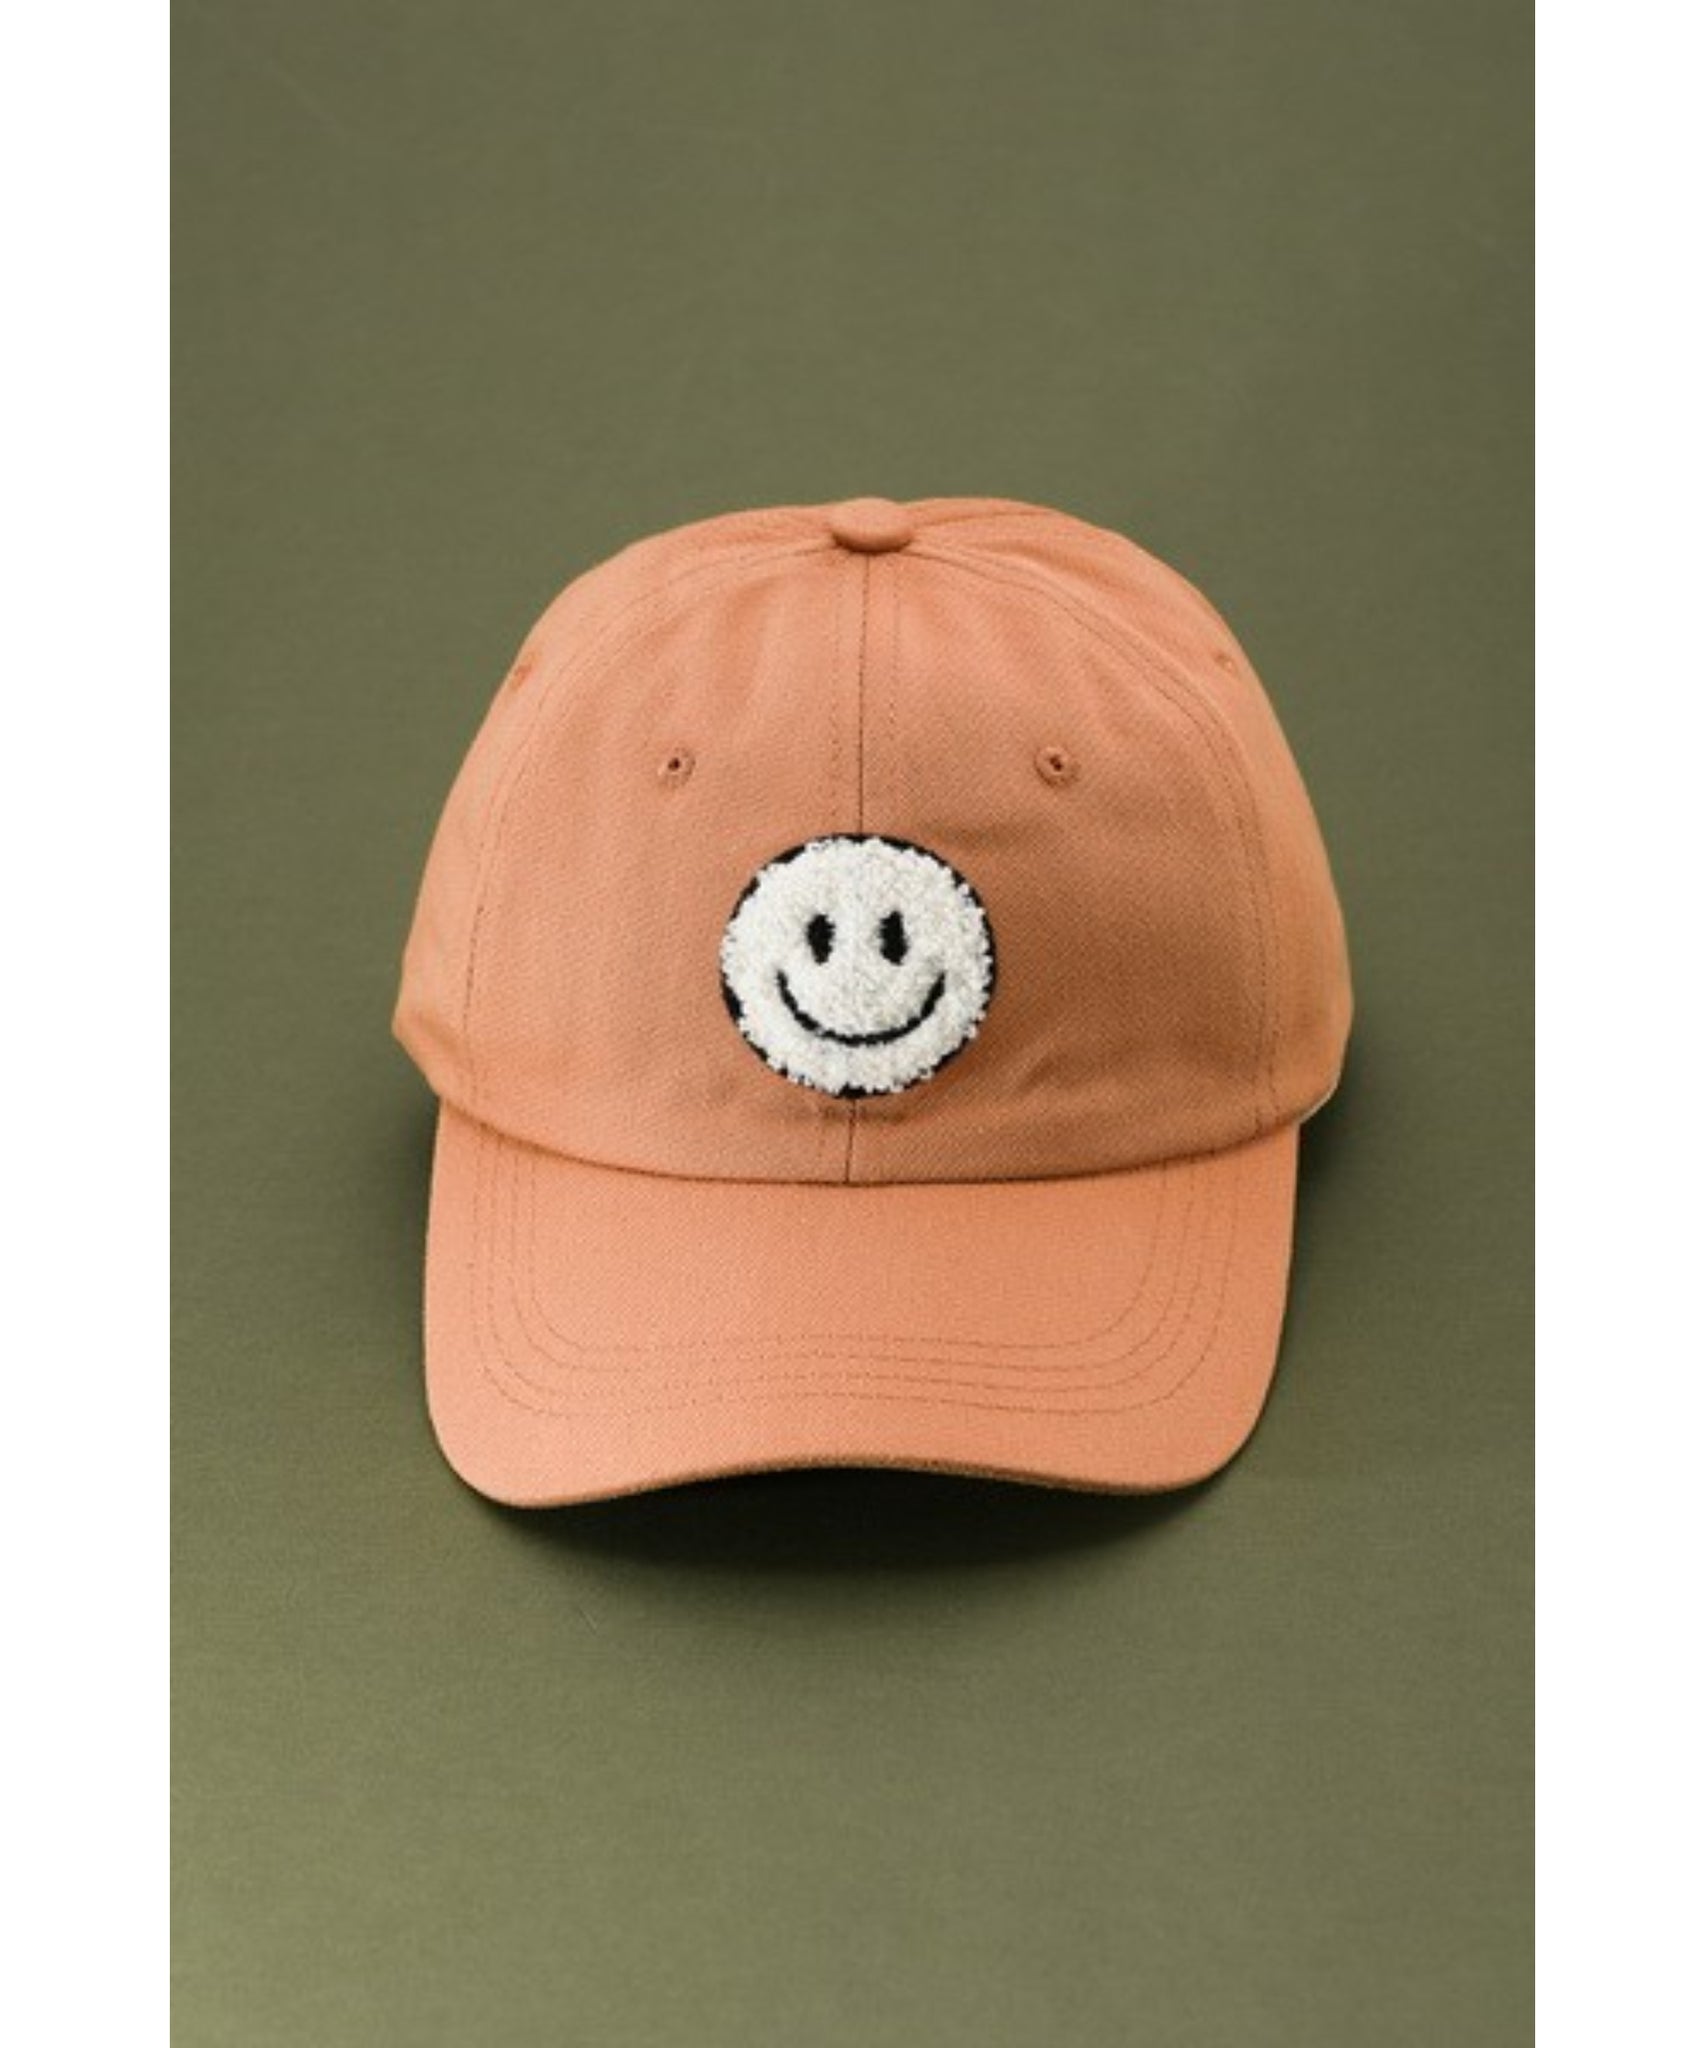 All Smiles Sherpa Baseball Cap - Adobe